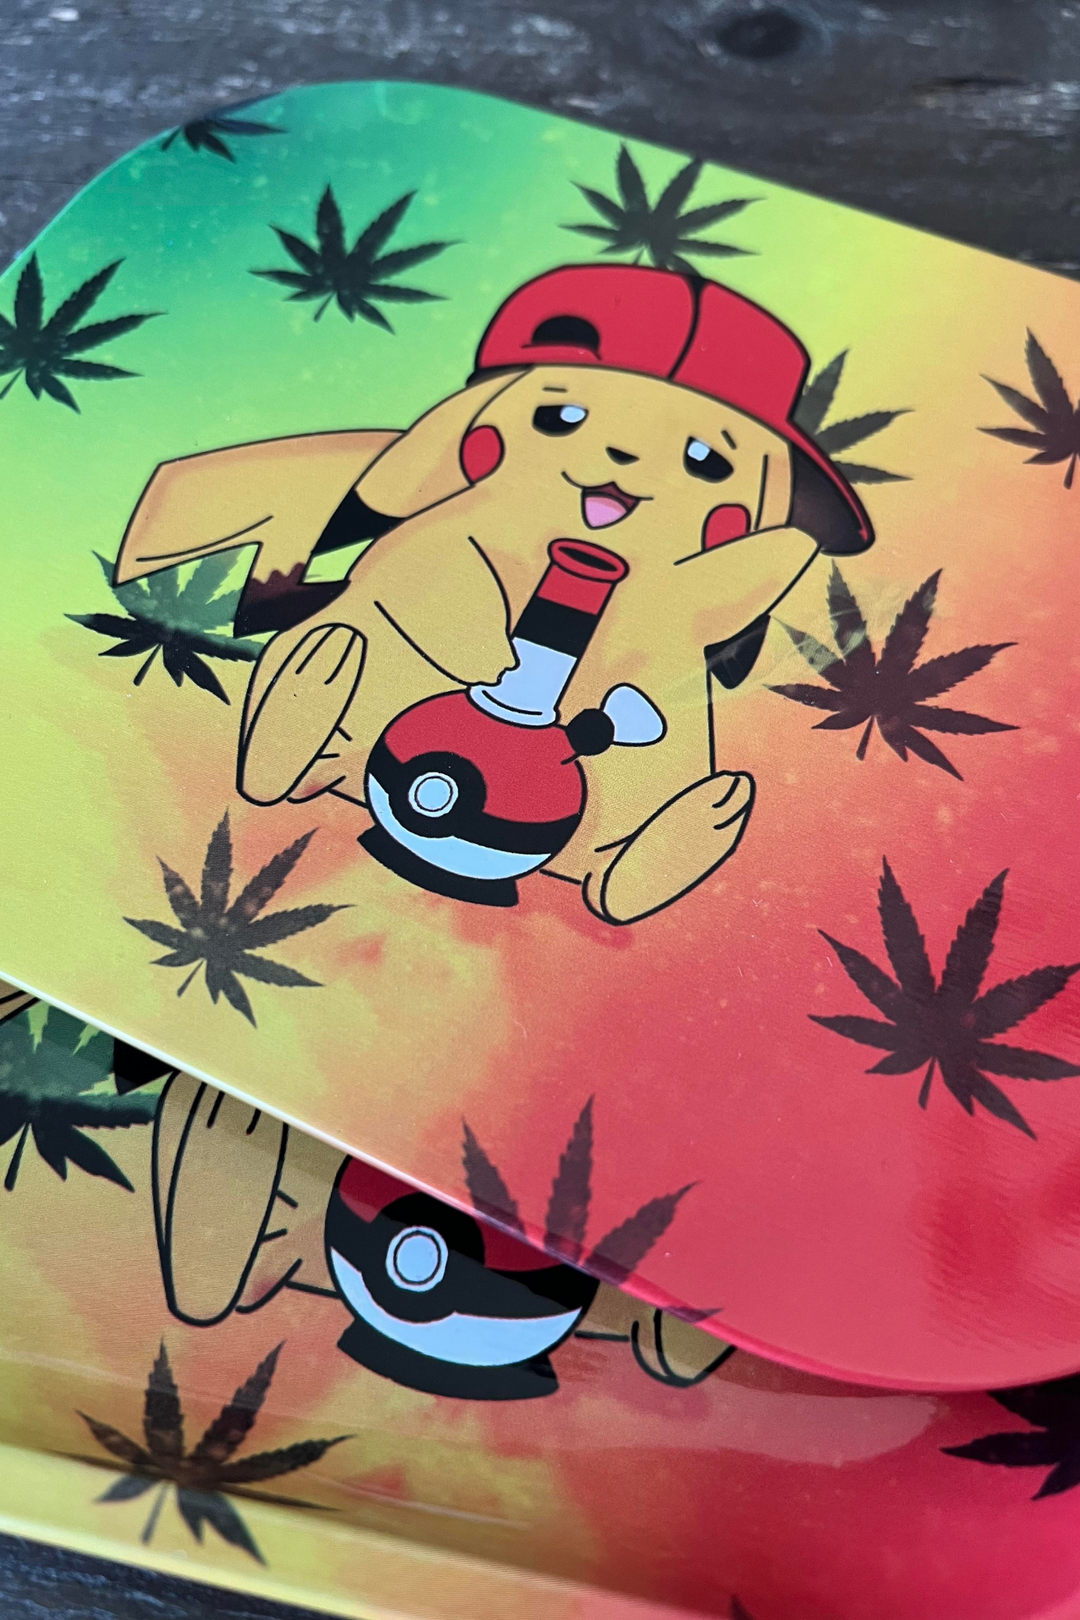 Stoned Pikachu Rolling Tray